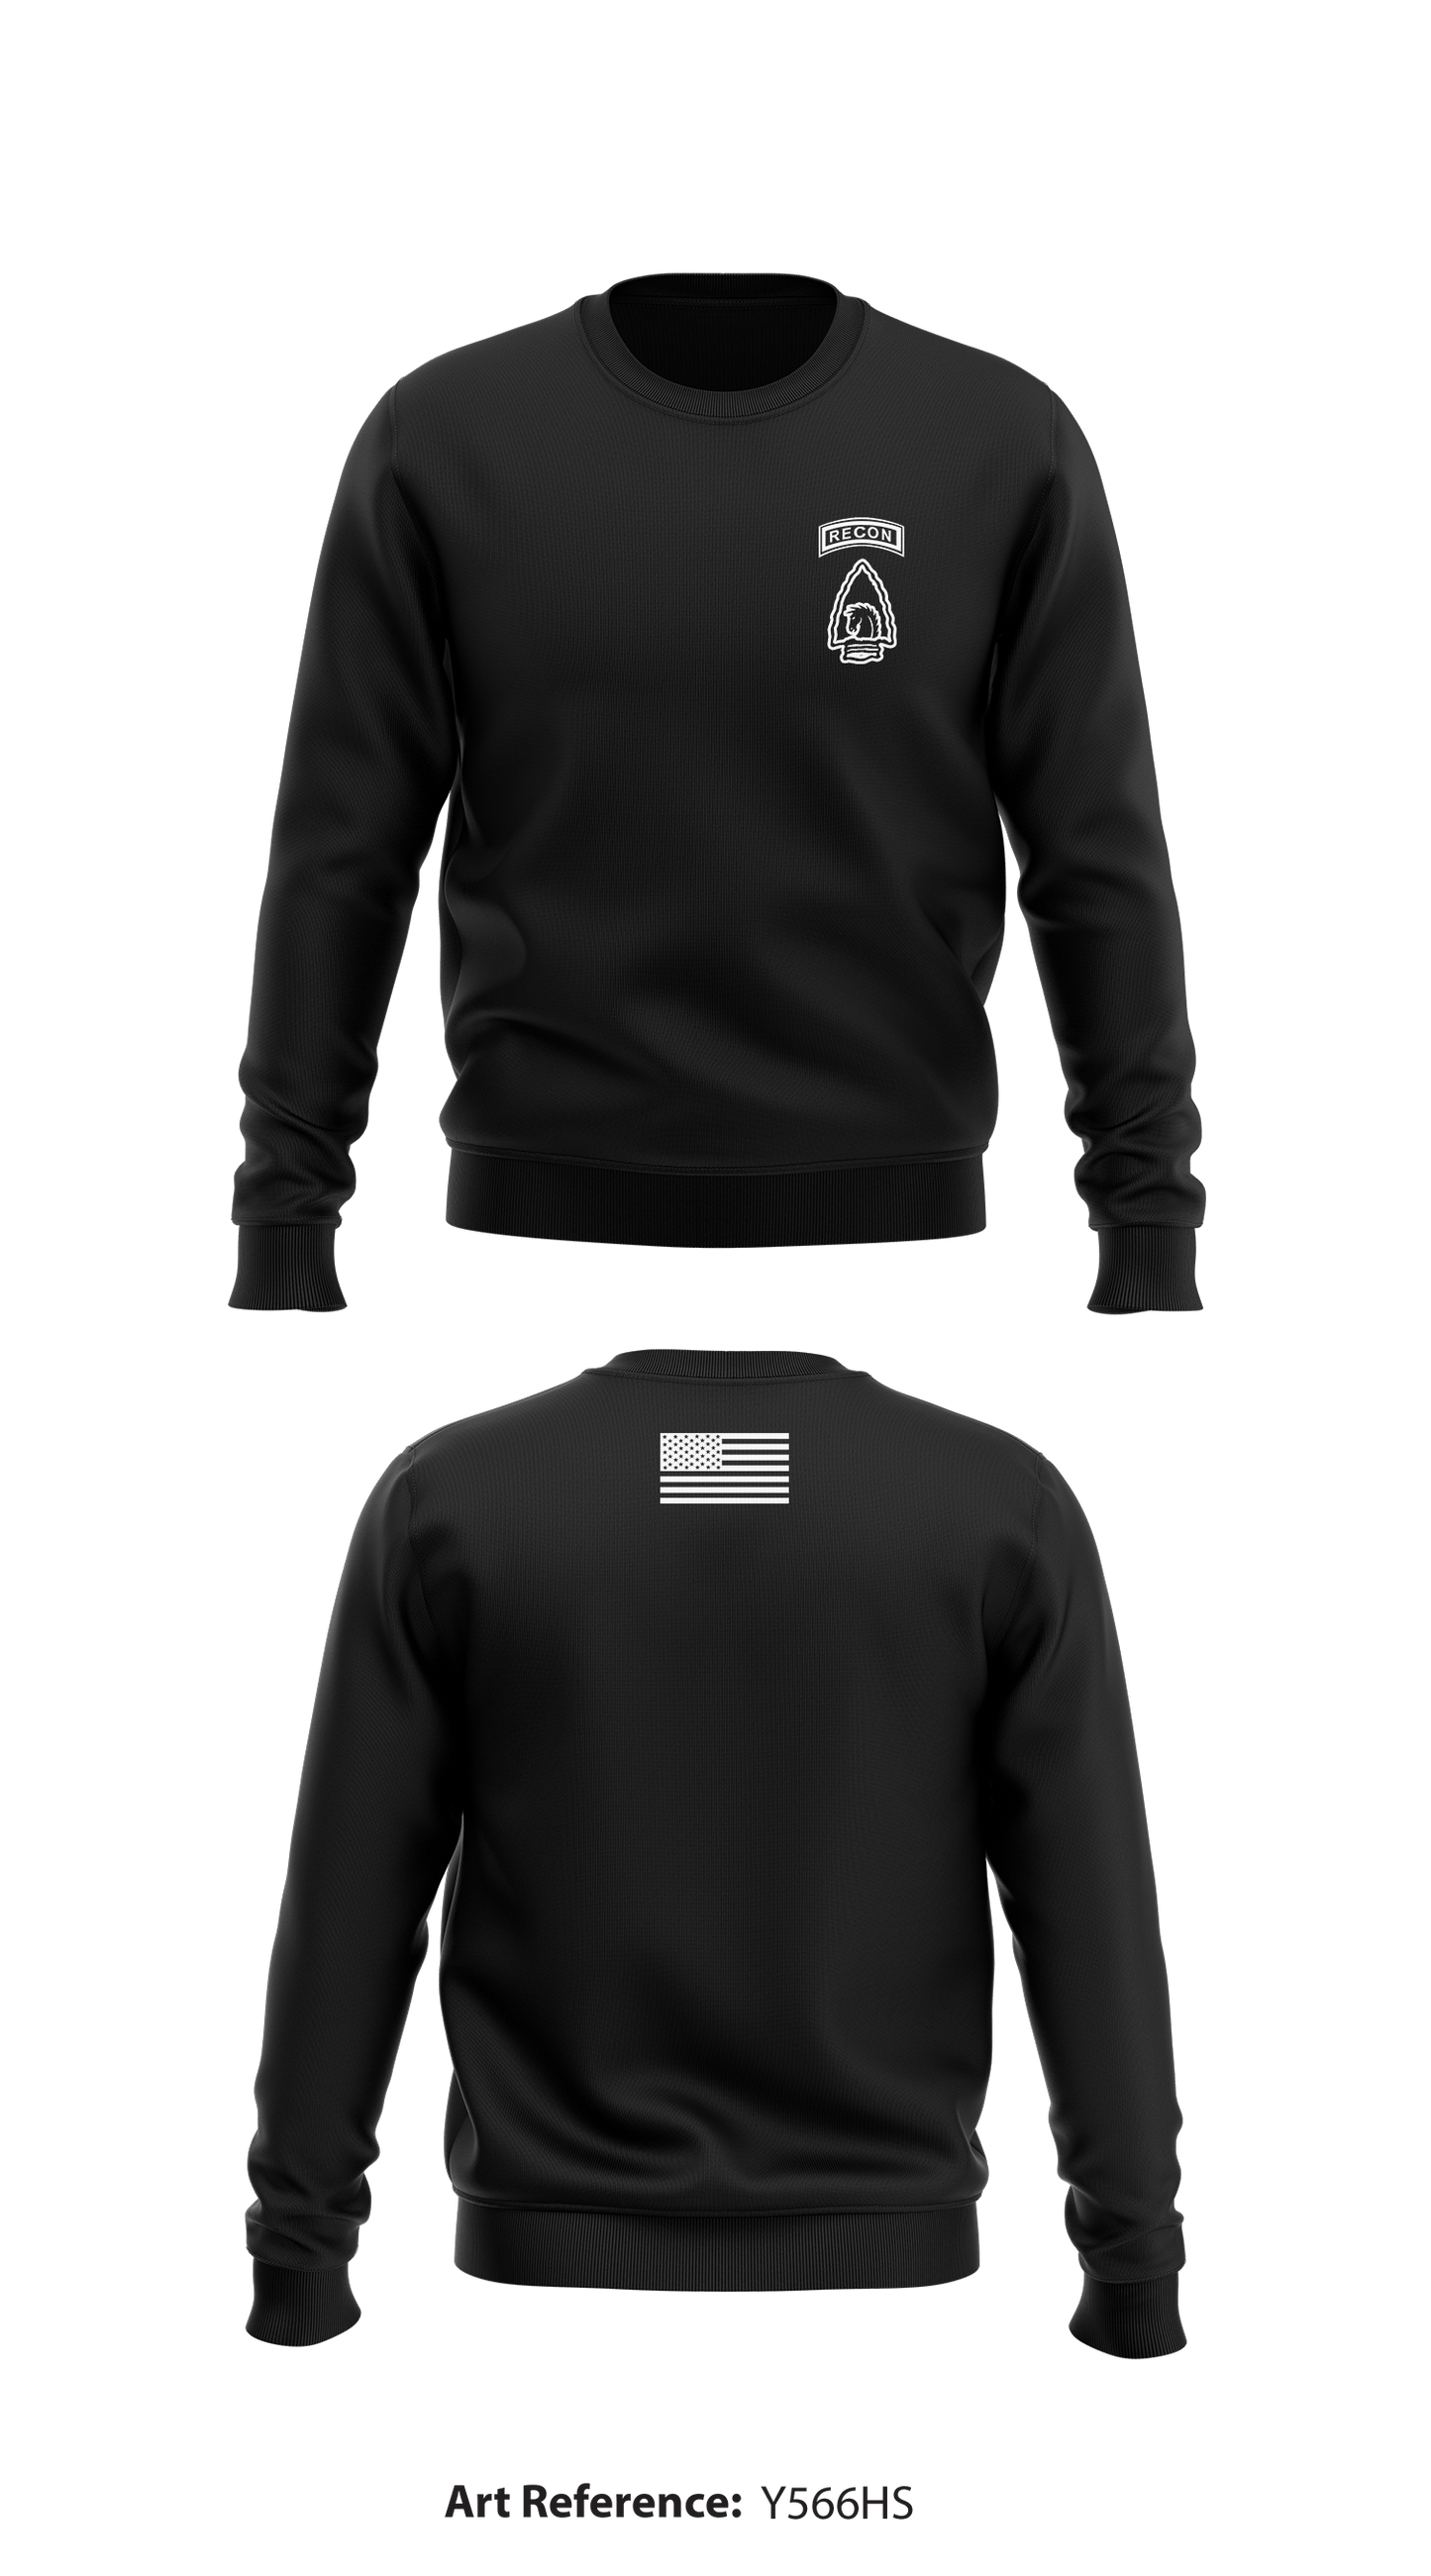 B Troop 1-73 CAV Store 1 Core Men's Crewneck Performance Sweatshirt - y566hS